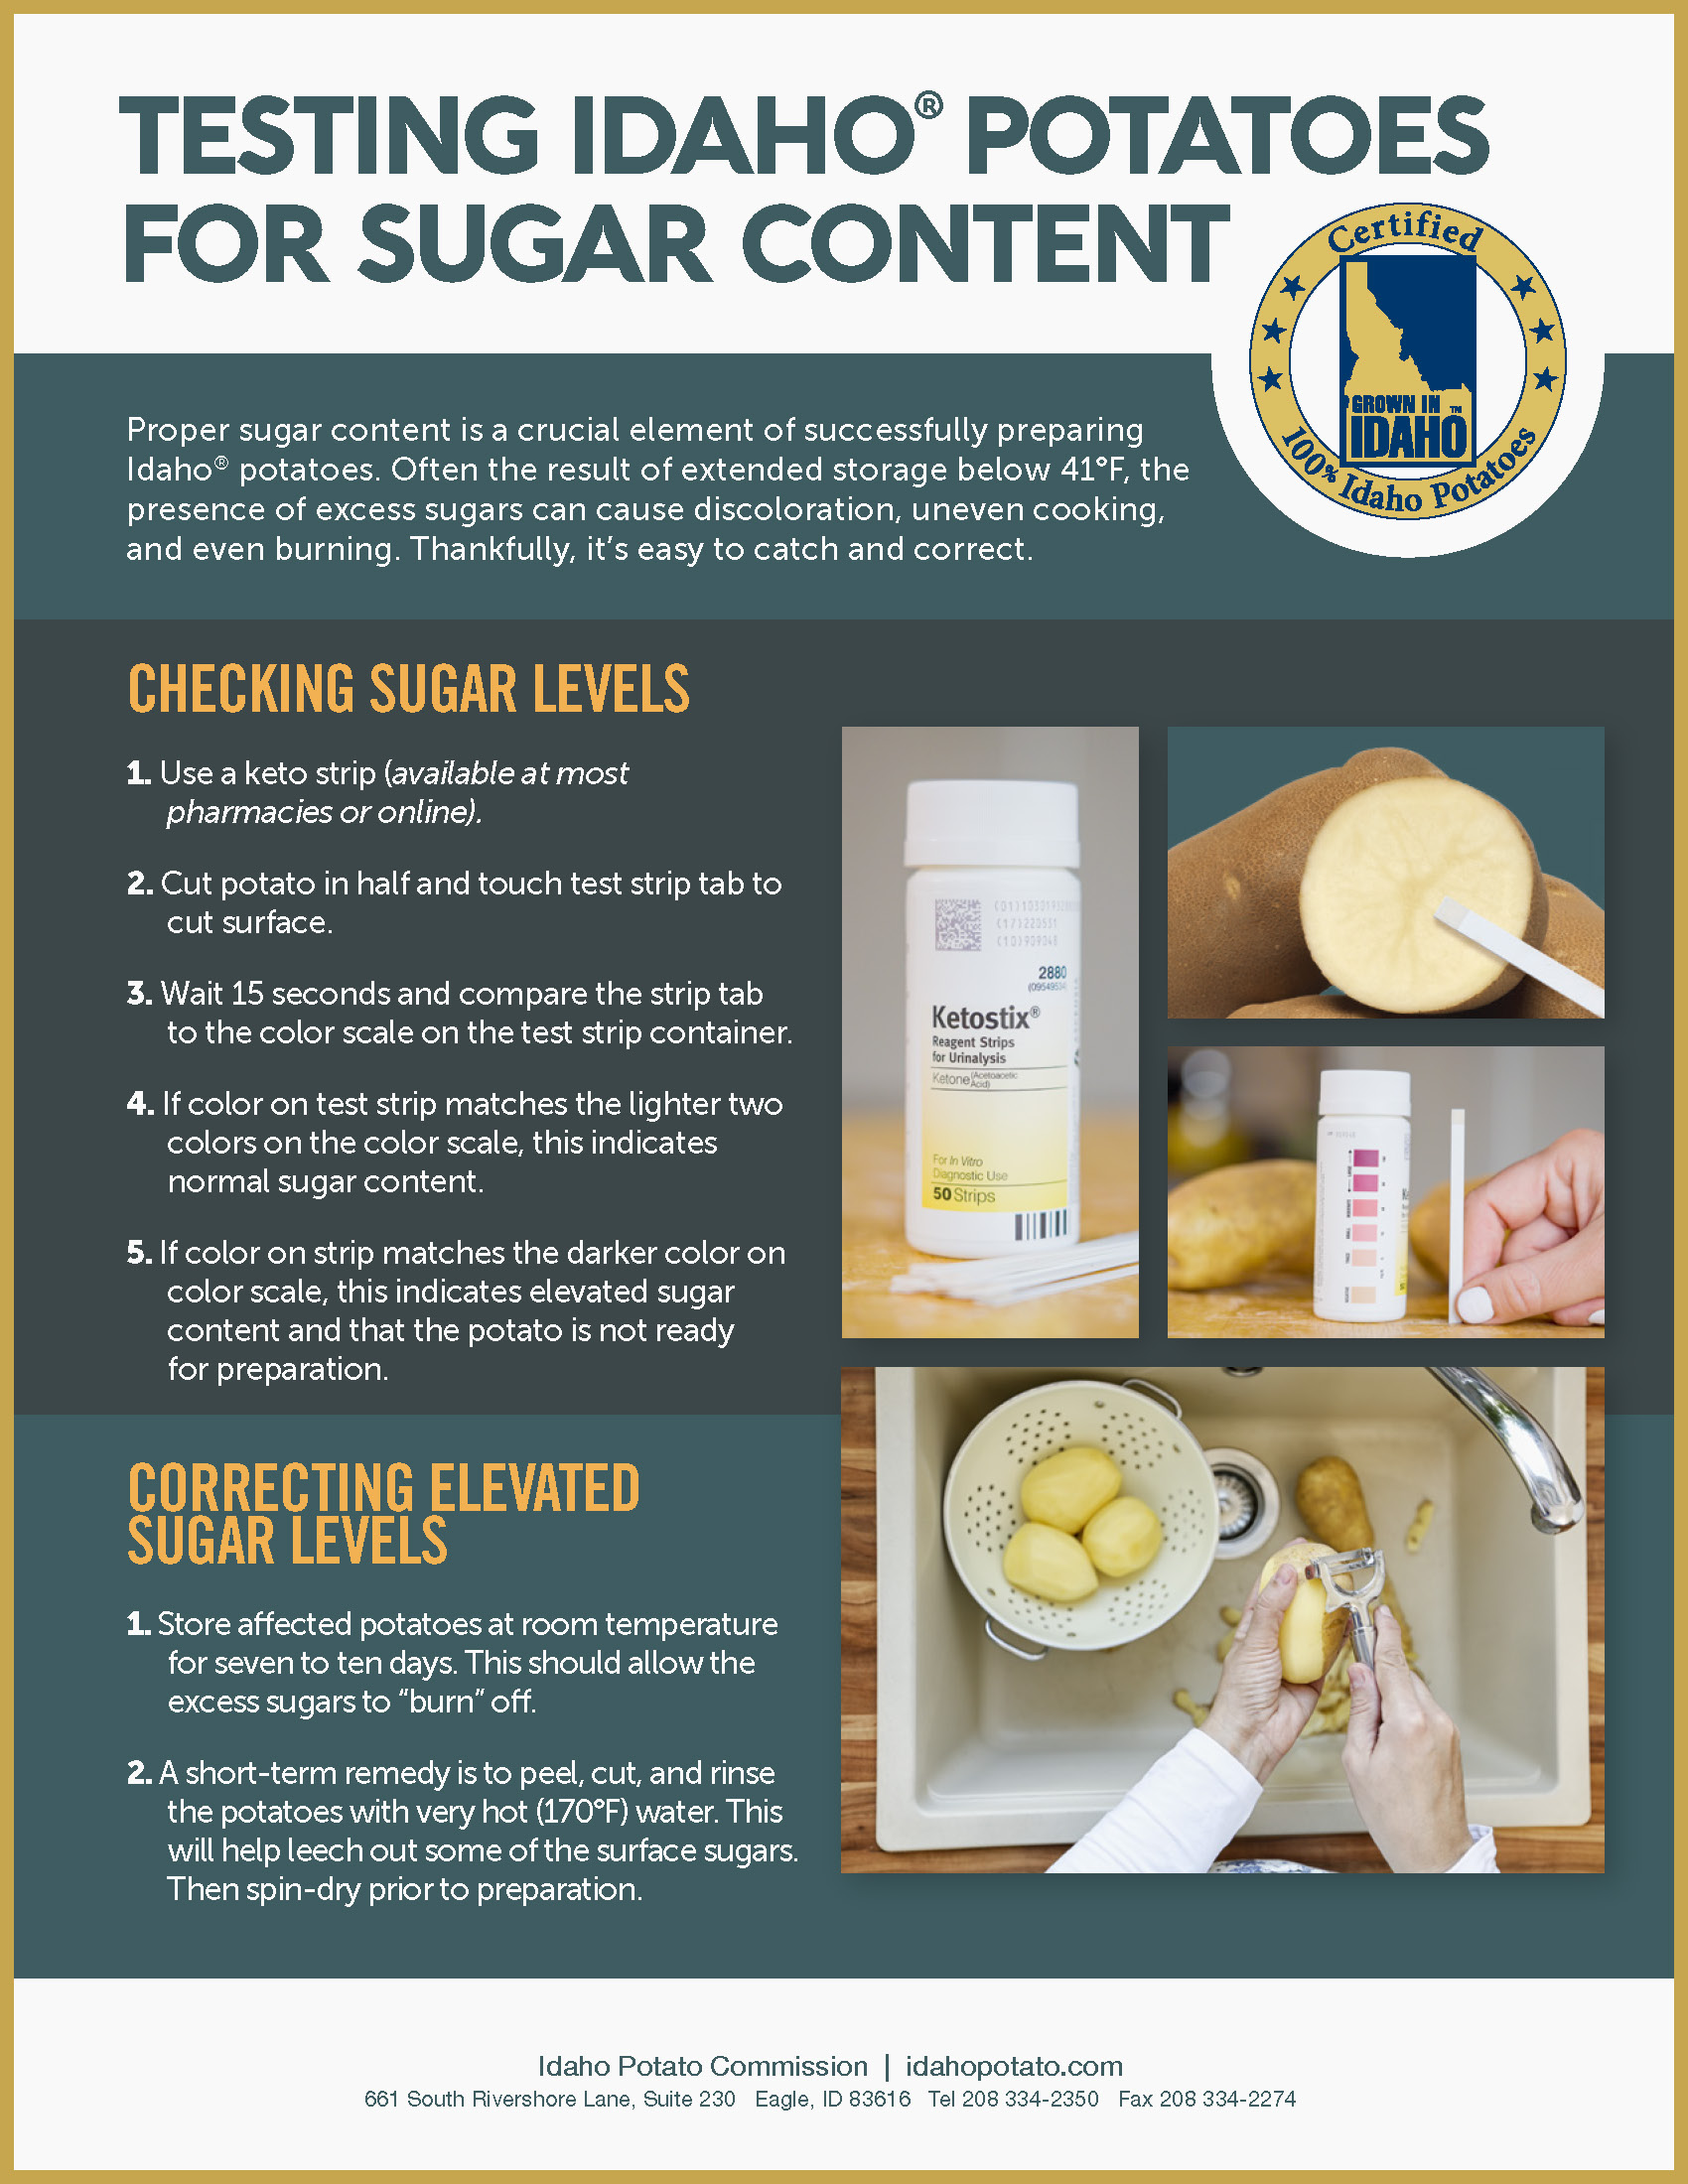 Testing Idaho® Potatoes for Sugar Content